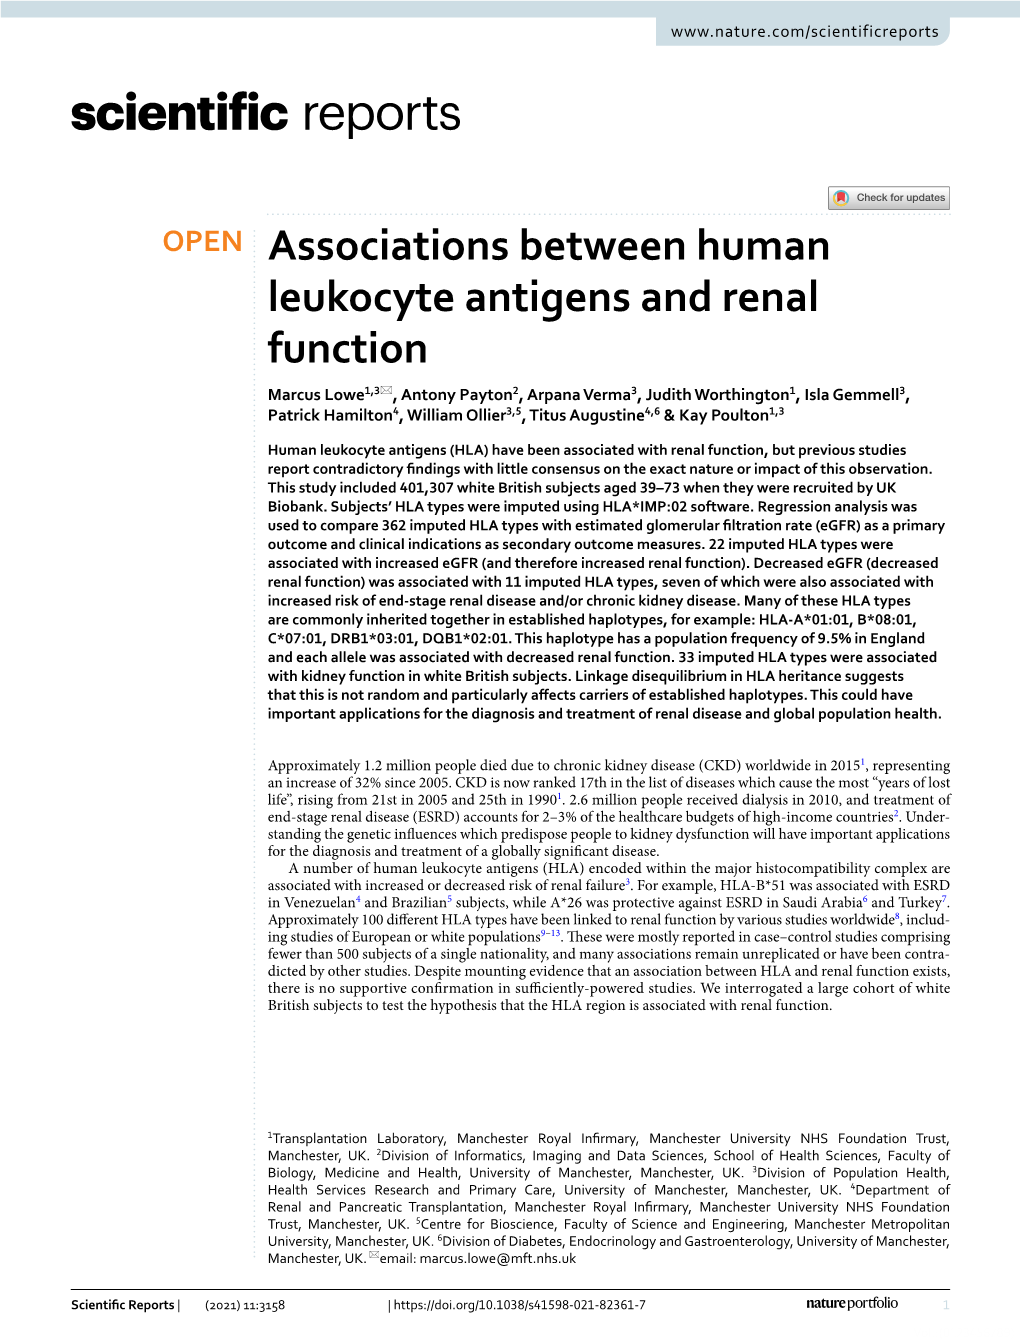 Associations Between Human Leukocyte Antigens and Renal Function